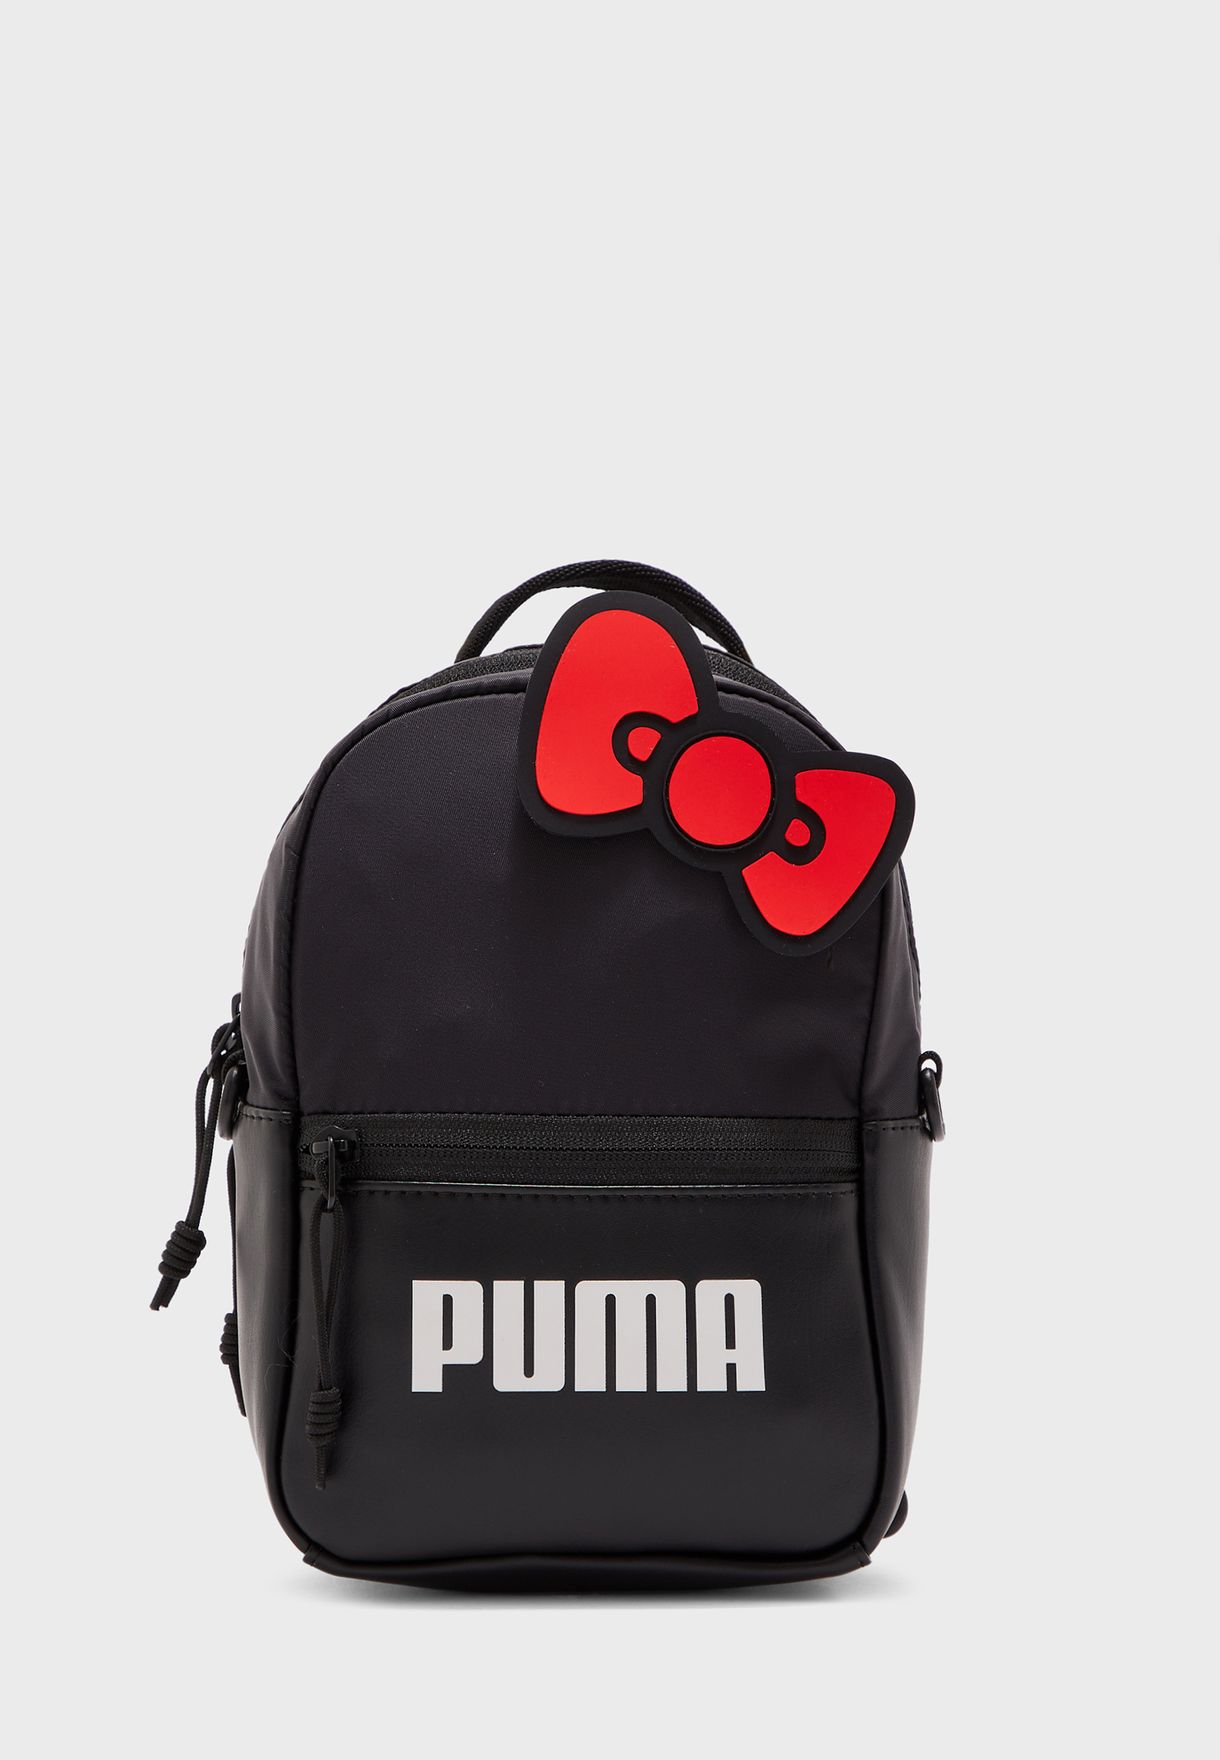 puma backpack purse